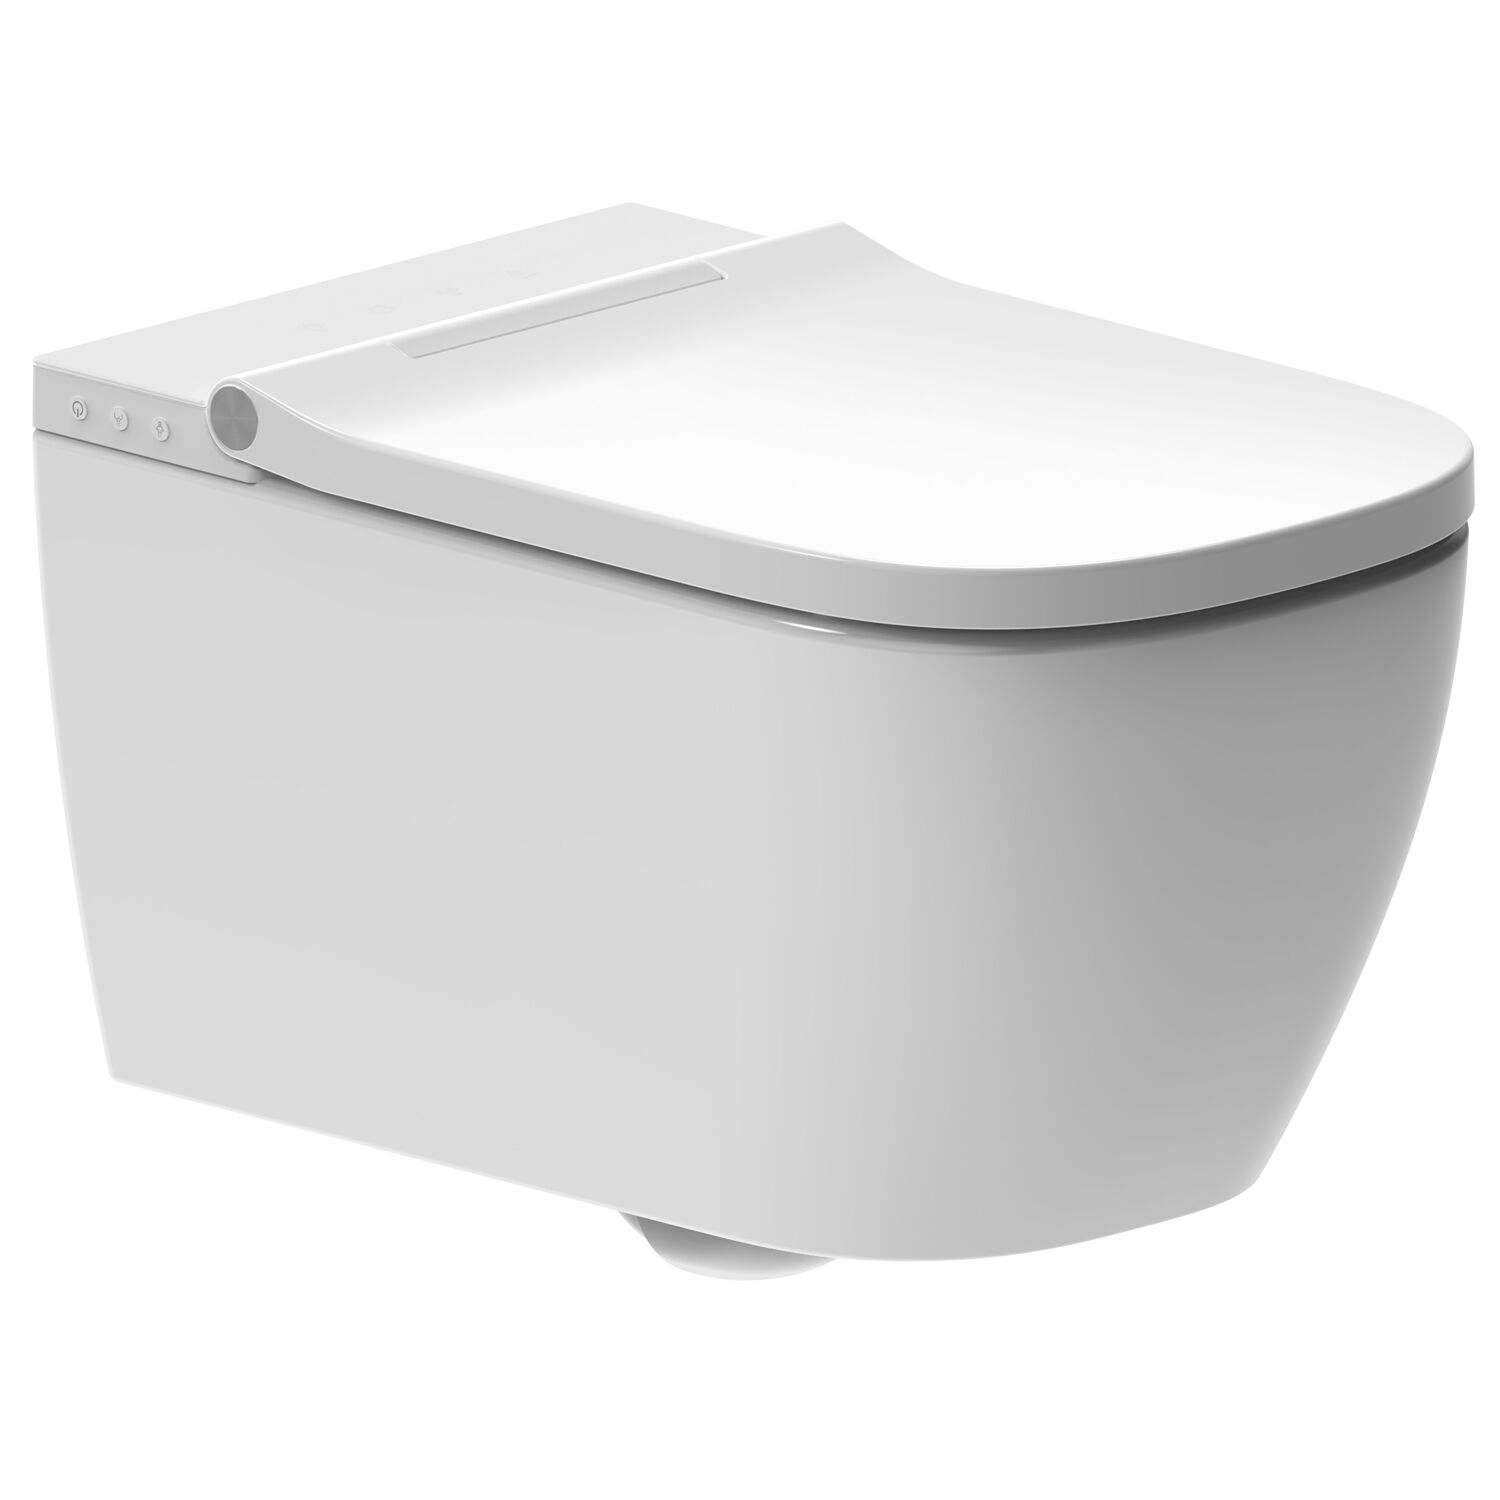 Kirchhoff Dusch WC, BadeDu spülrandlos, Bidetfunktion, | Absenkautomatik, Weiß mit